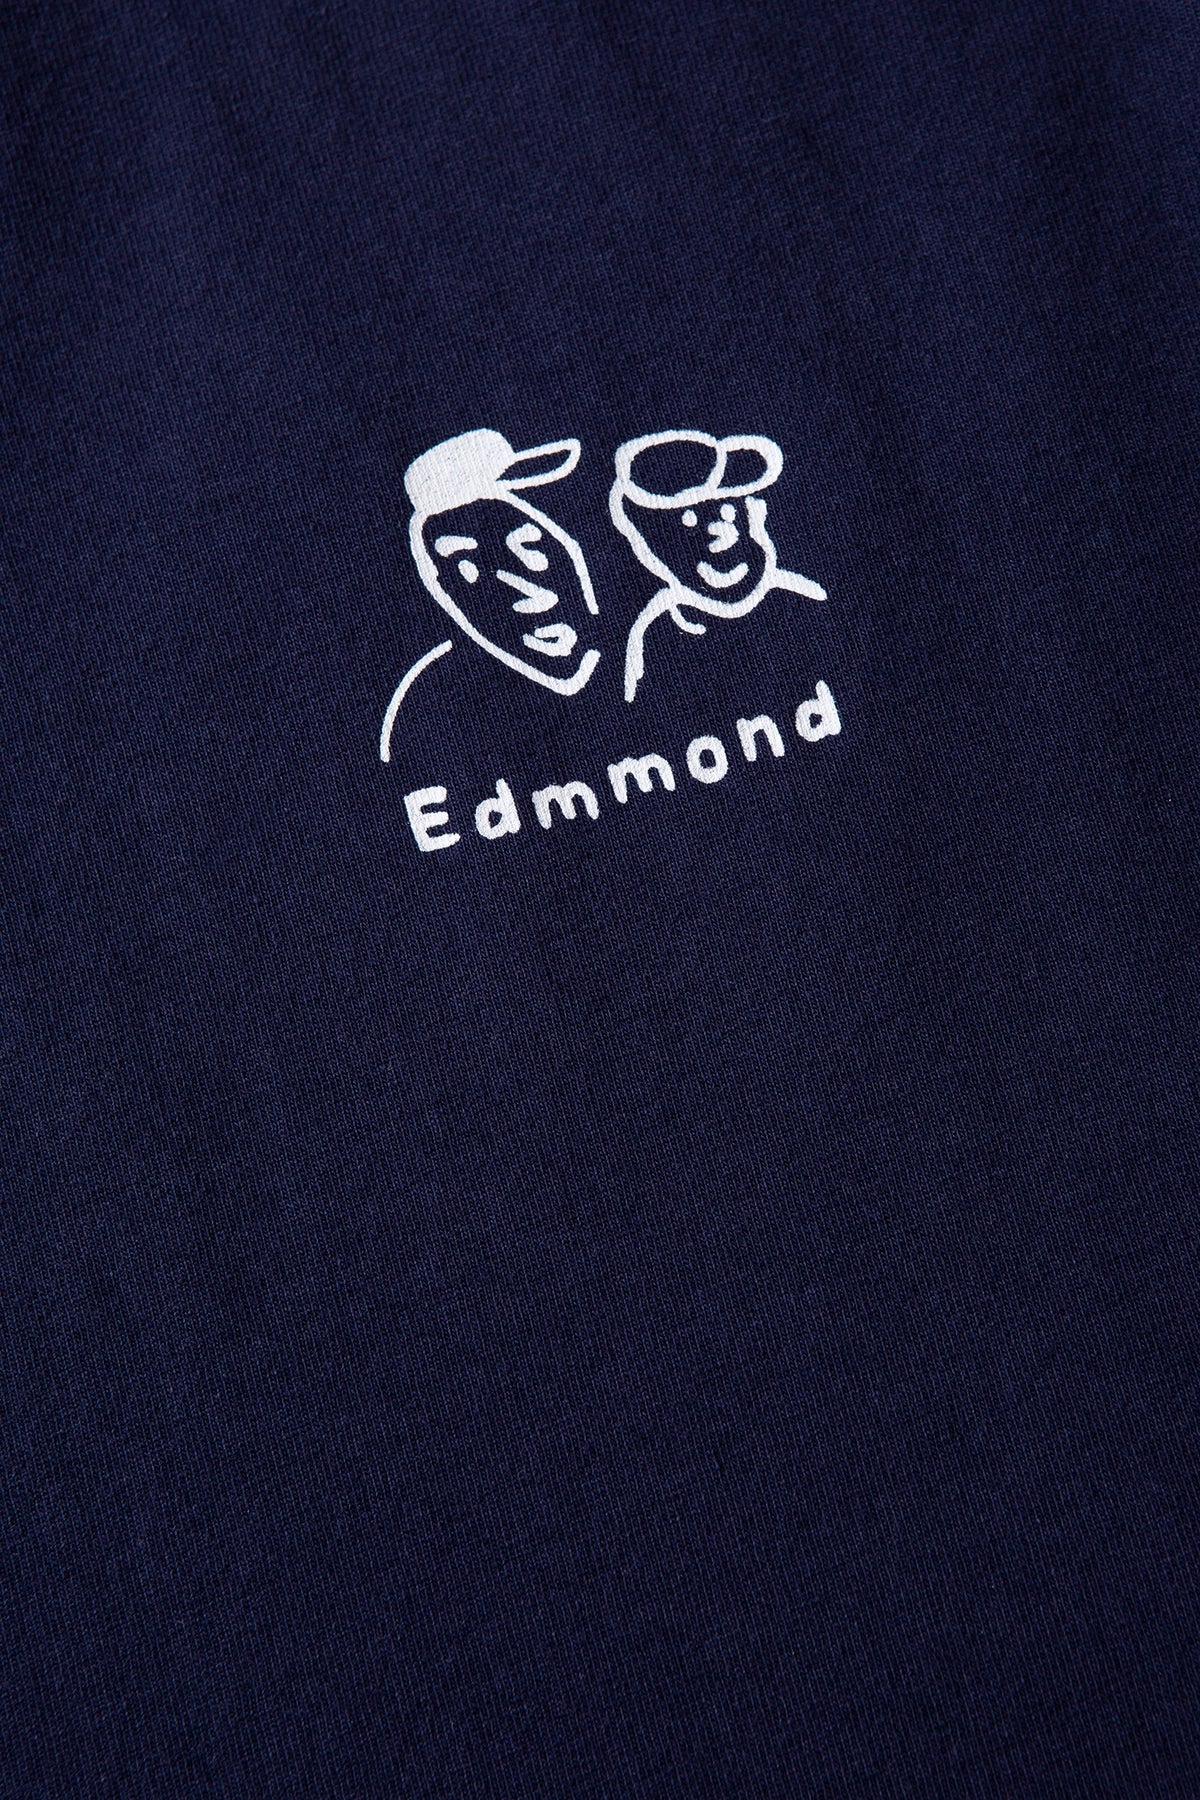 Camiseta Edmmond Studios People Navy